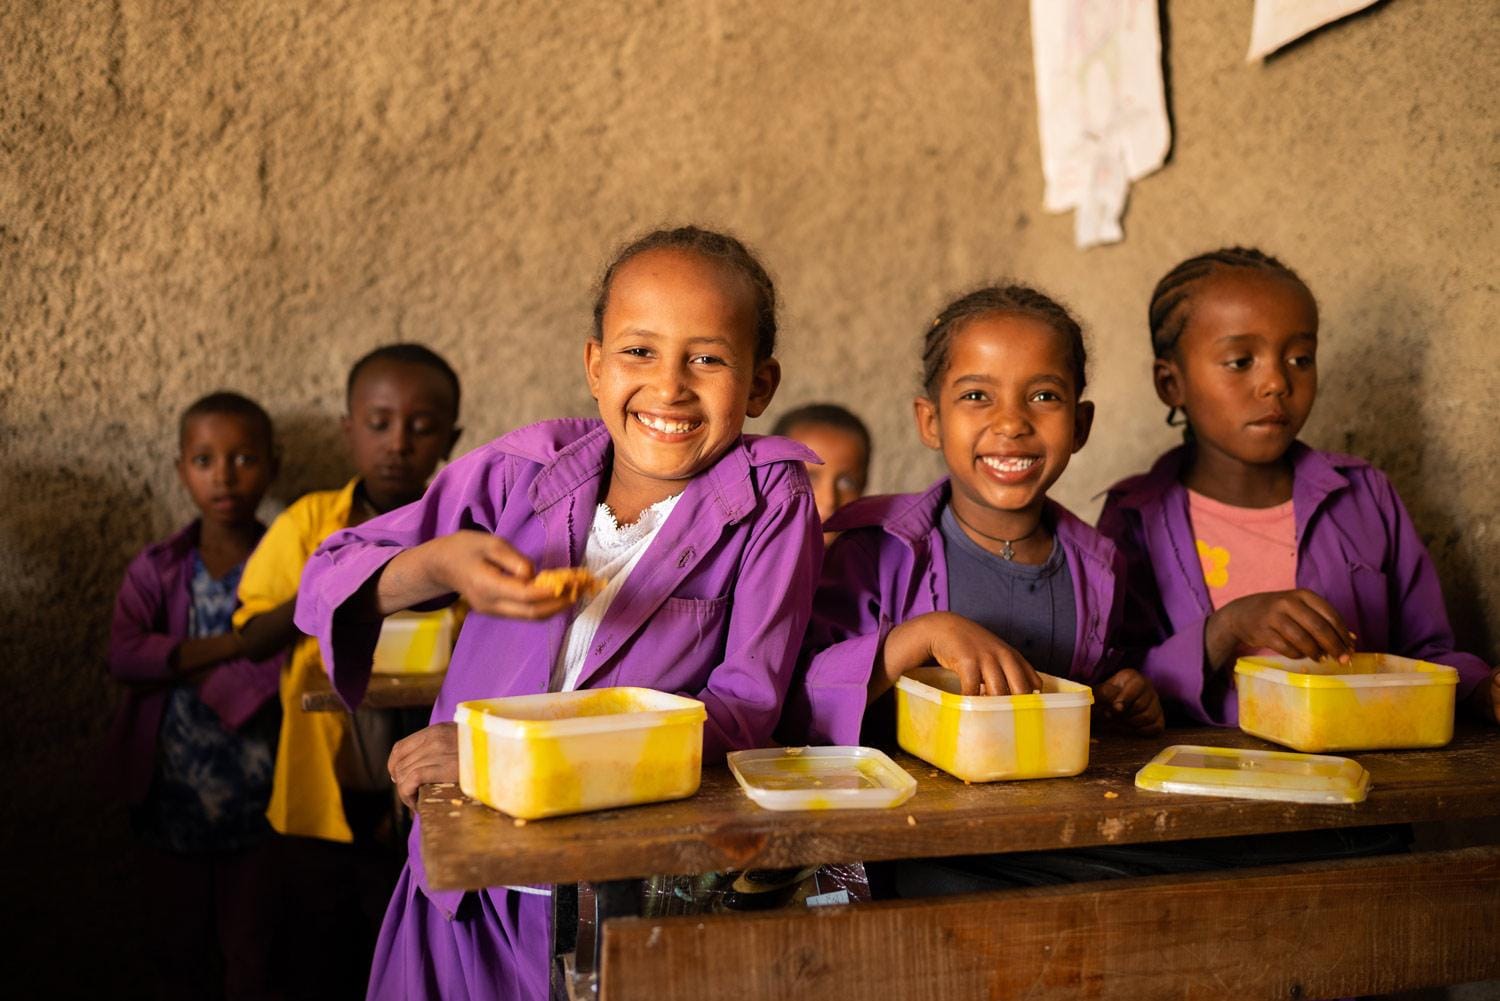 Group of smiling village children receiving food